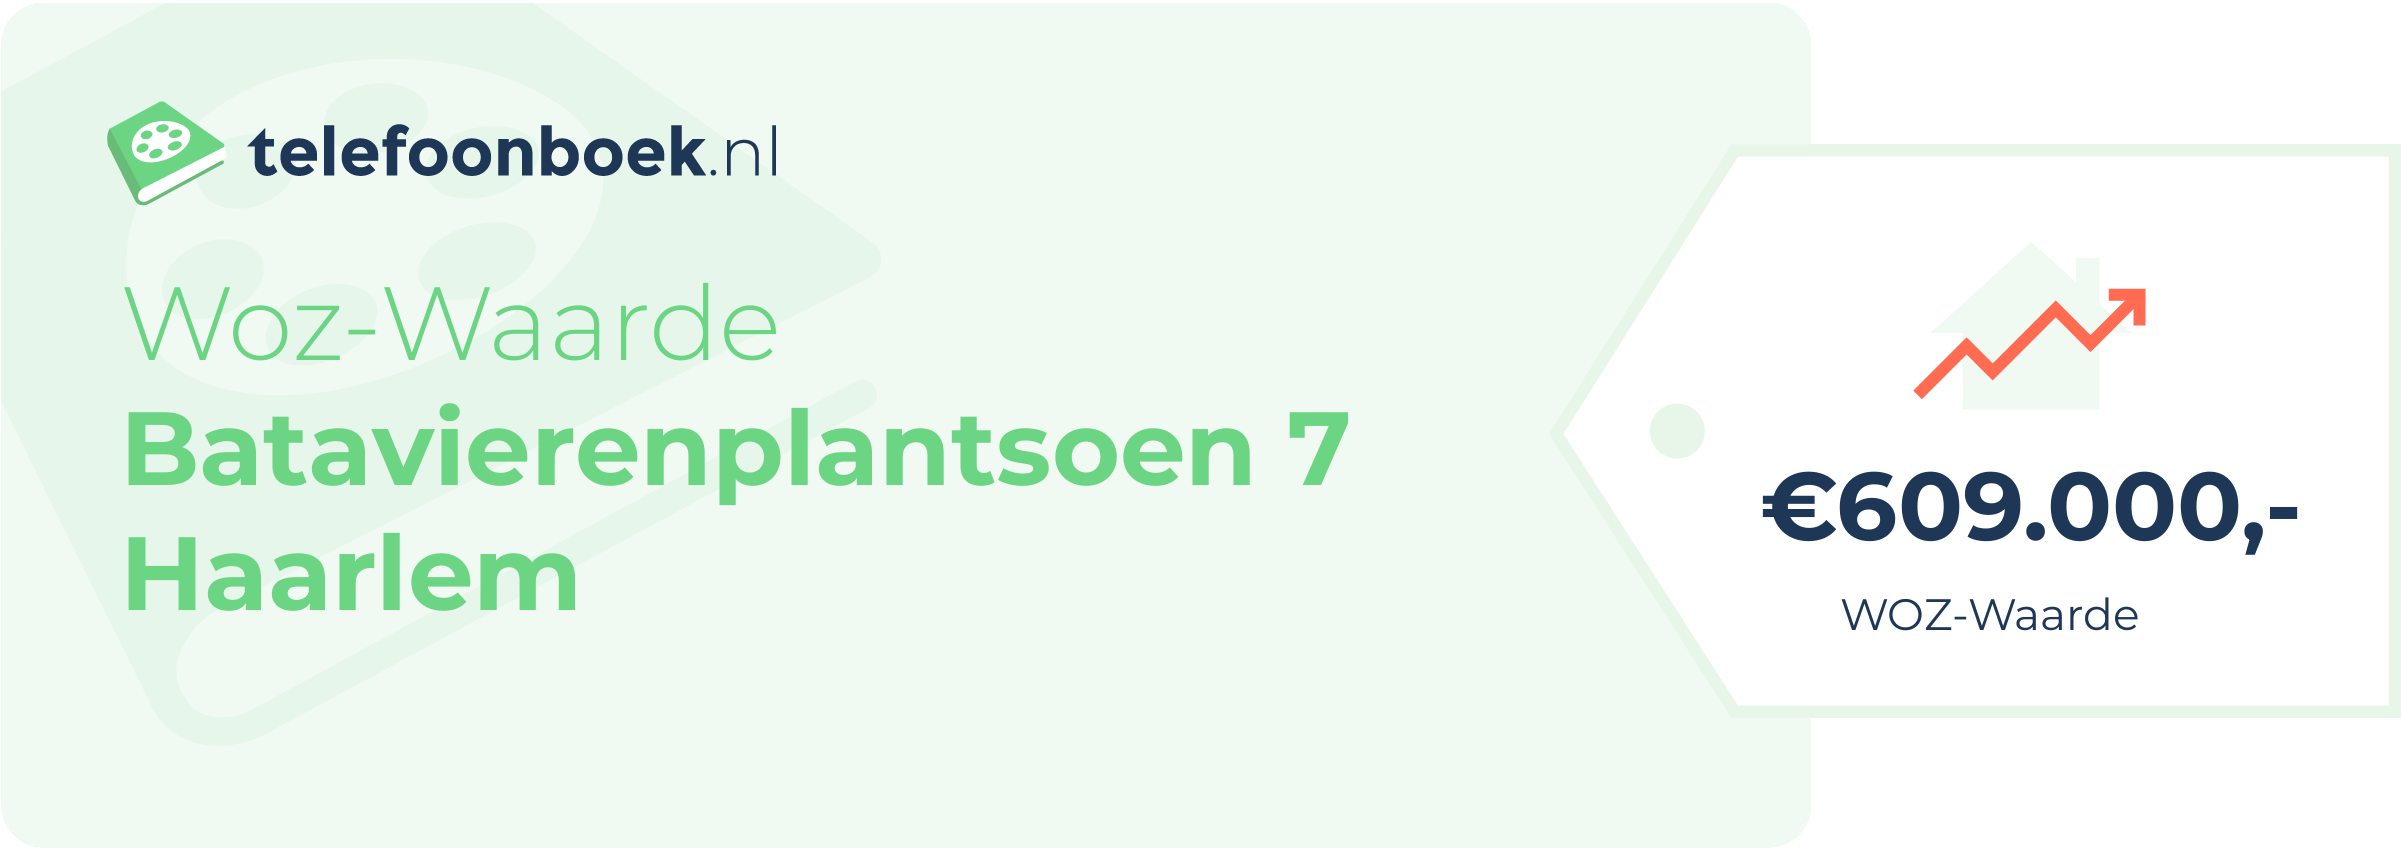 WOZ-waarde Batavierenplantsoen 7 Haarlem